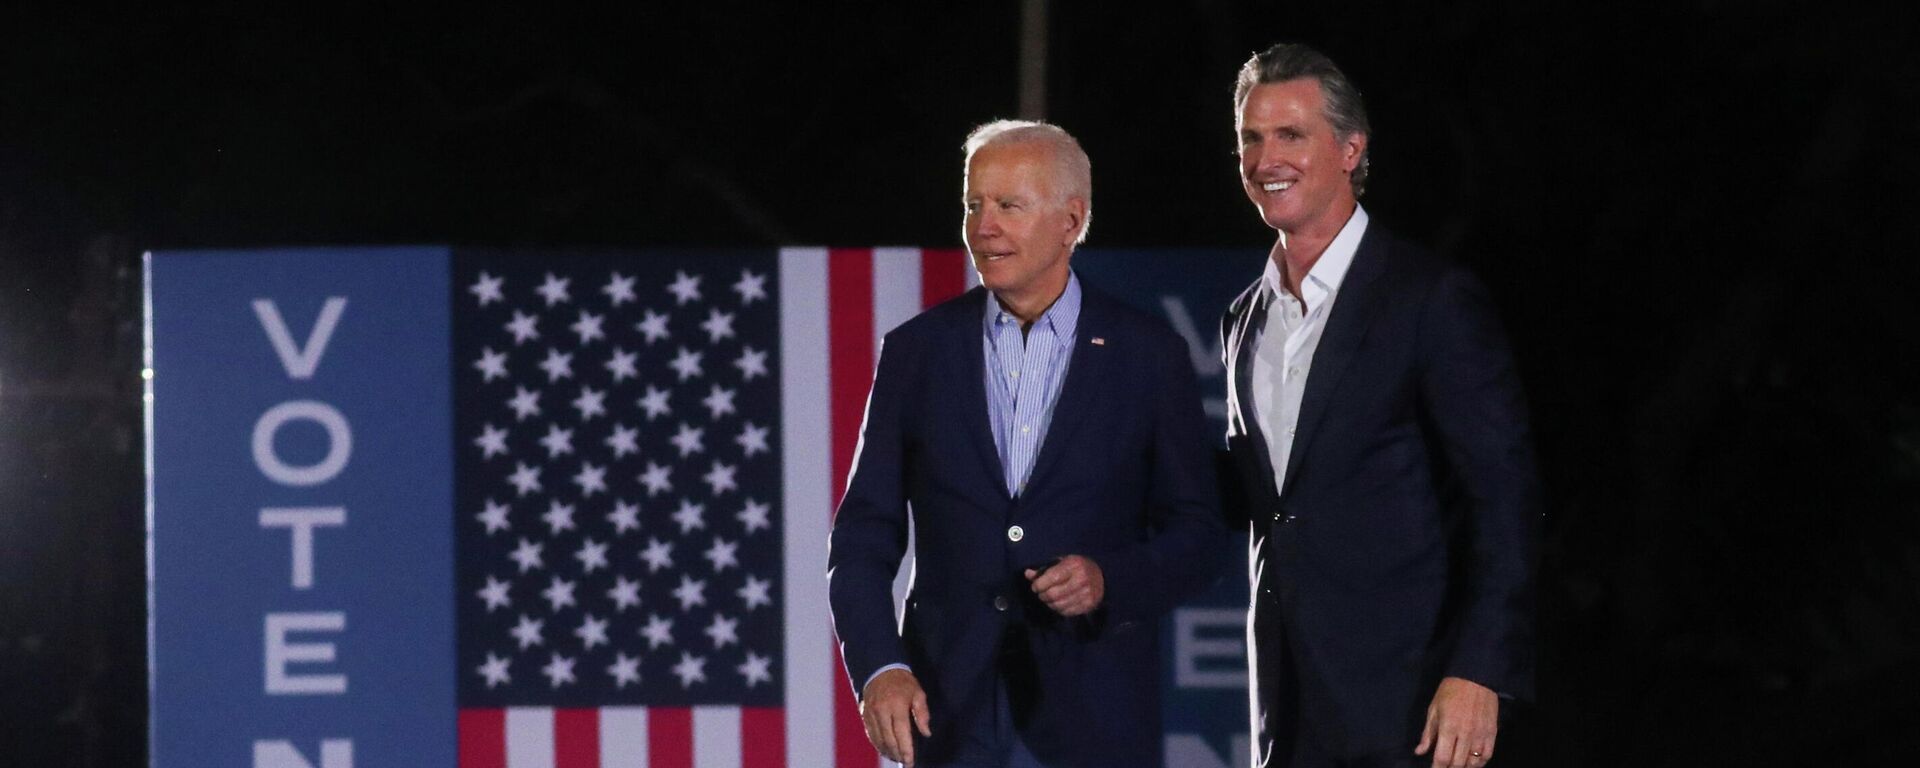 US President Joe Biden walks with California Governor Gavin Newsom at an election rally - Sputnik International, 1920, 14.09.2021